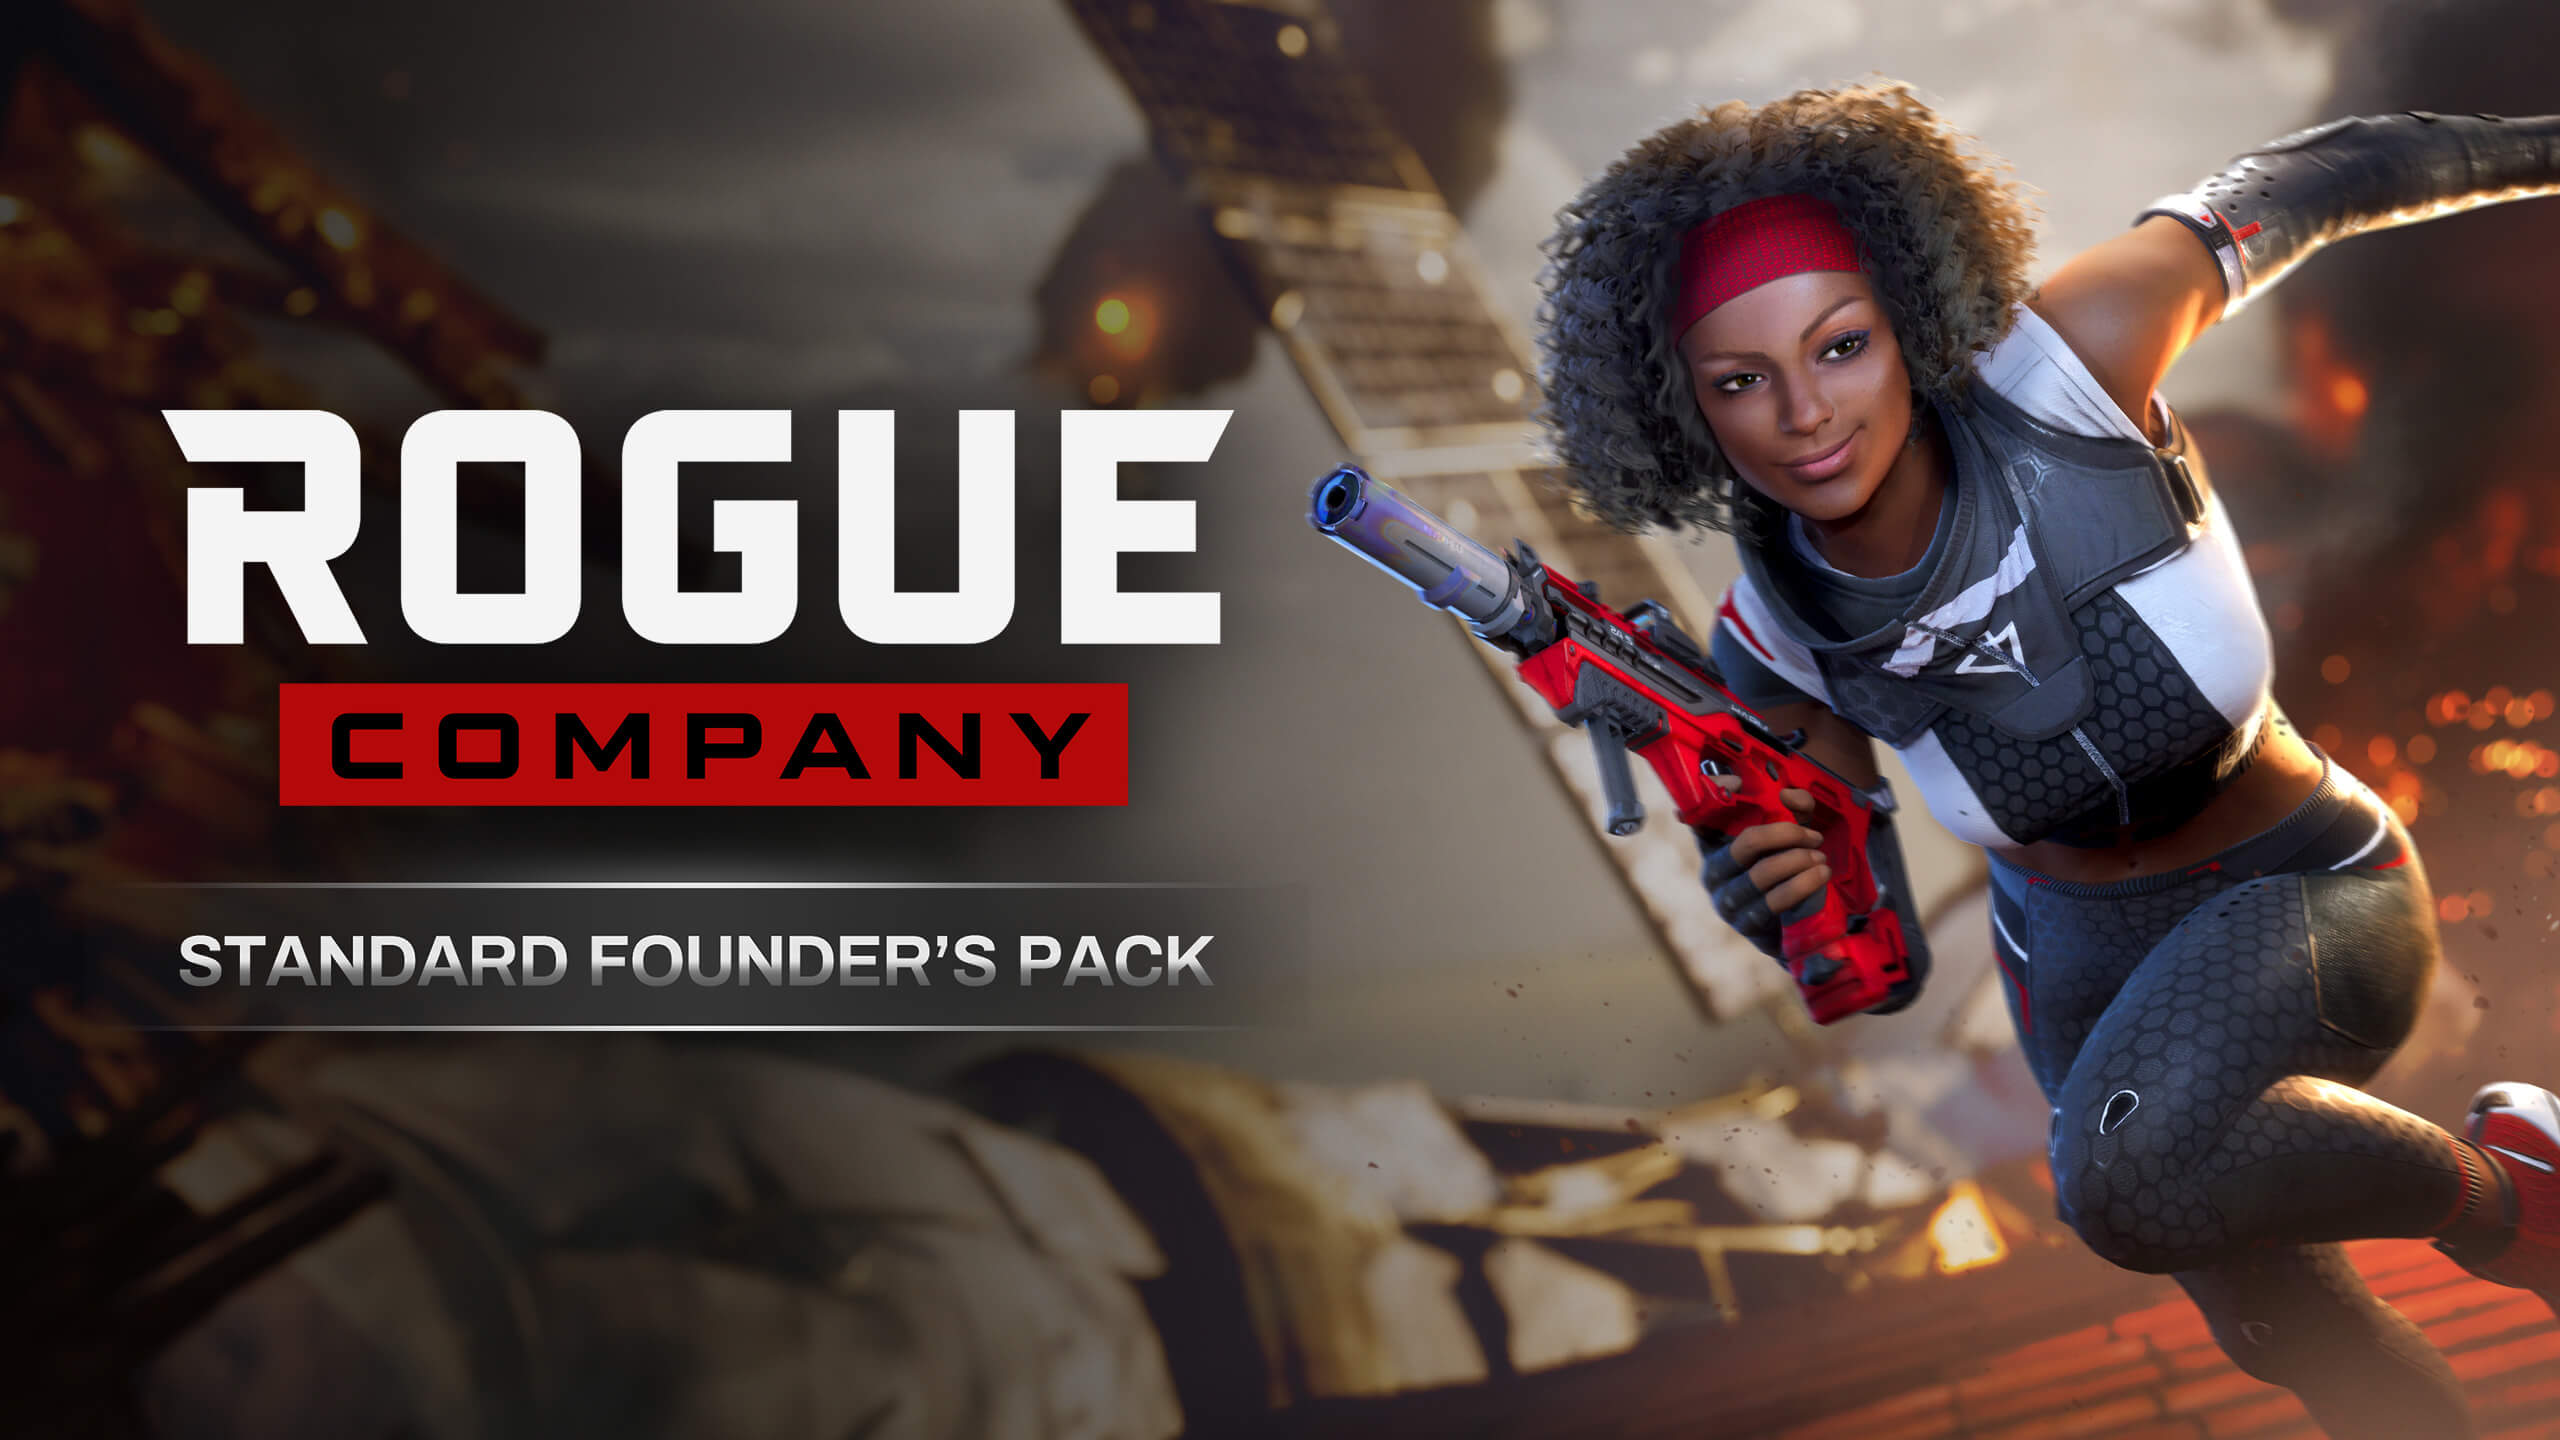 Rogue Company 2020 4K Ultra HD Mobile Wallpaper